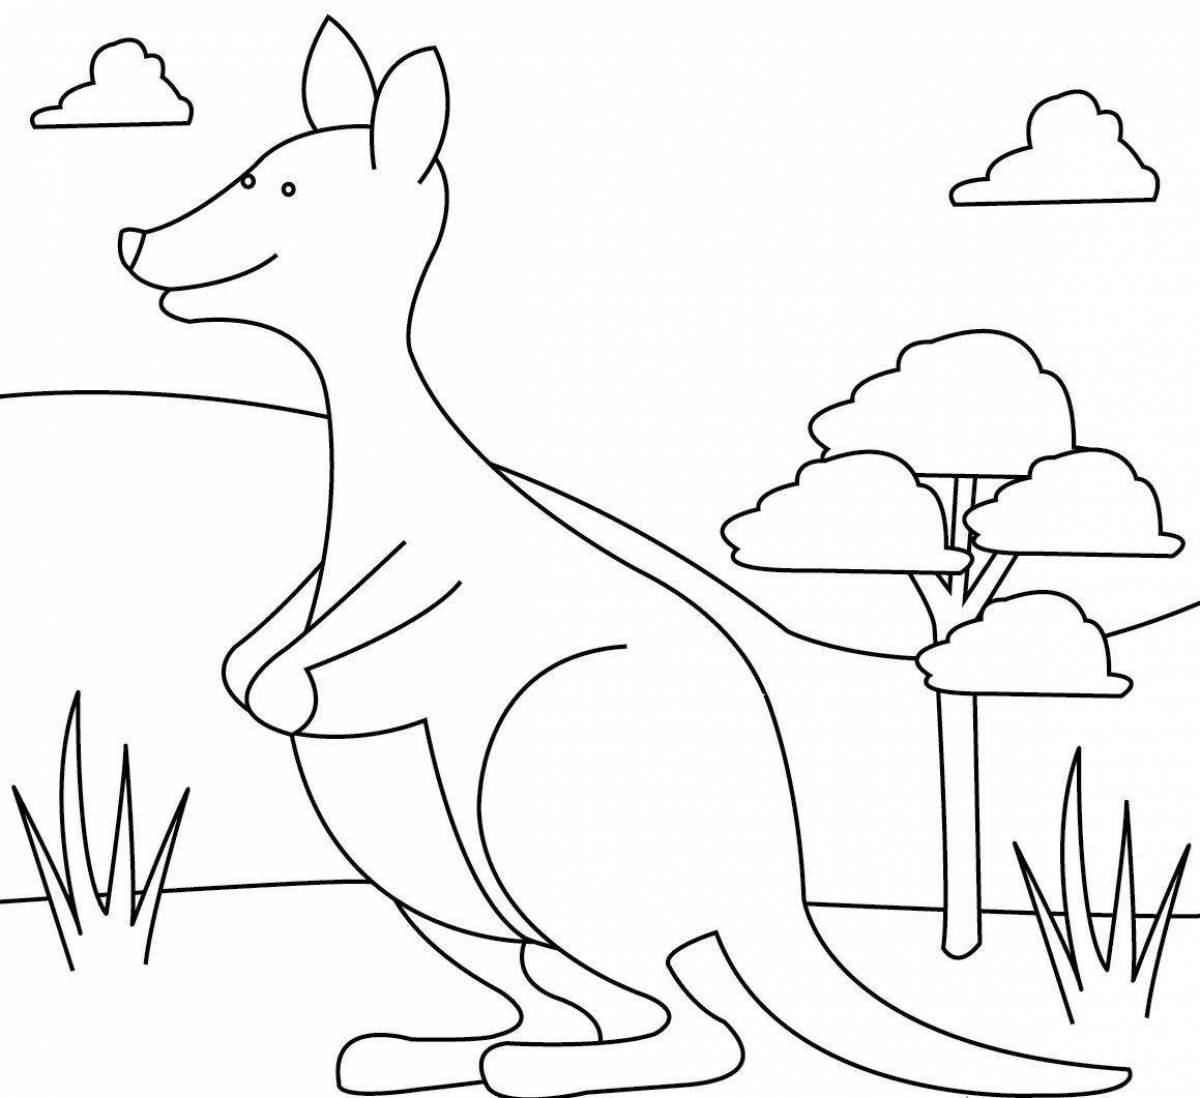 Adorable Australian animal coloring book for preschoolers